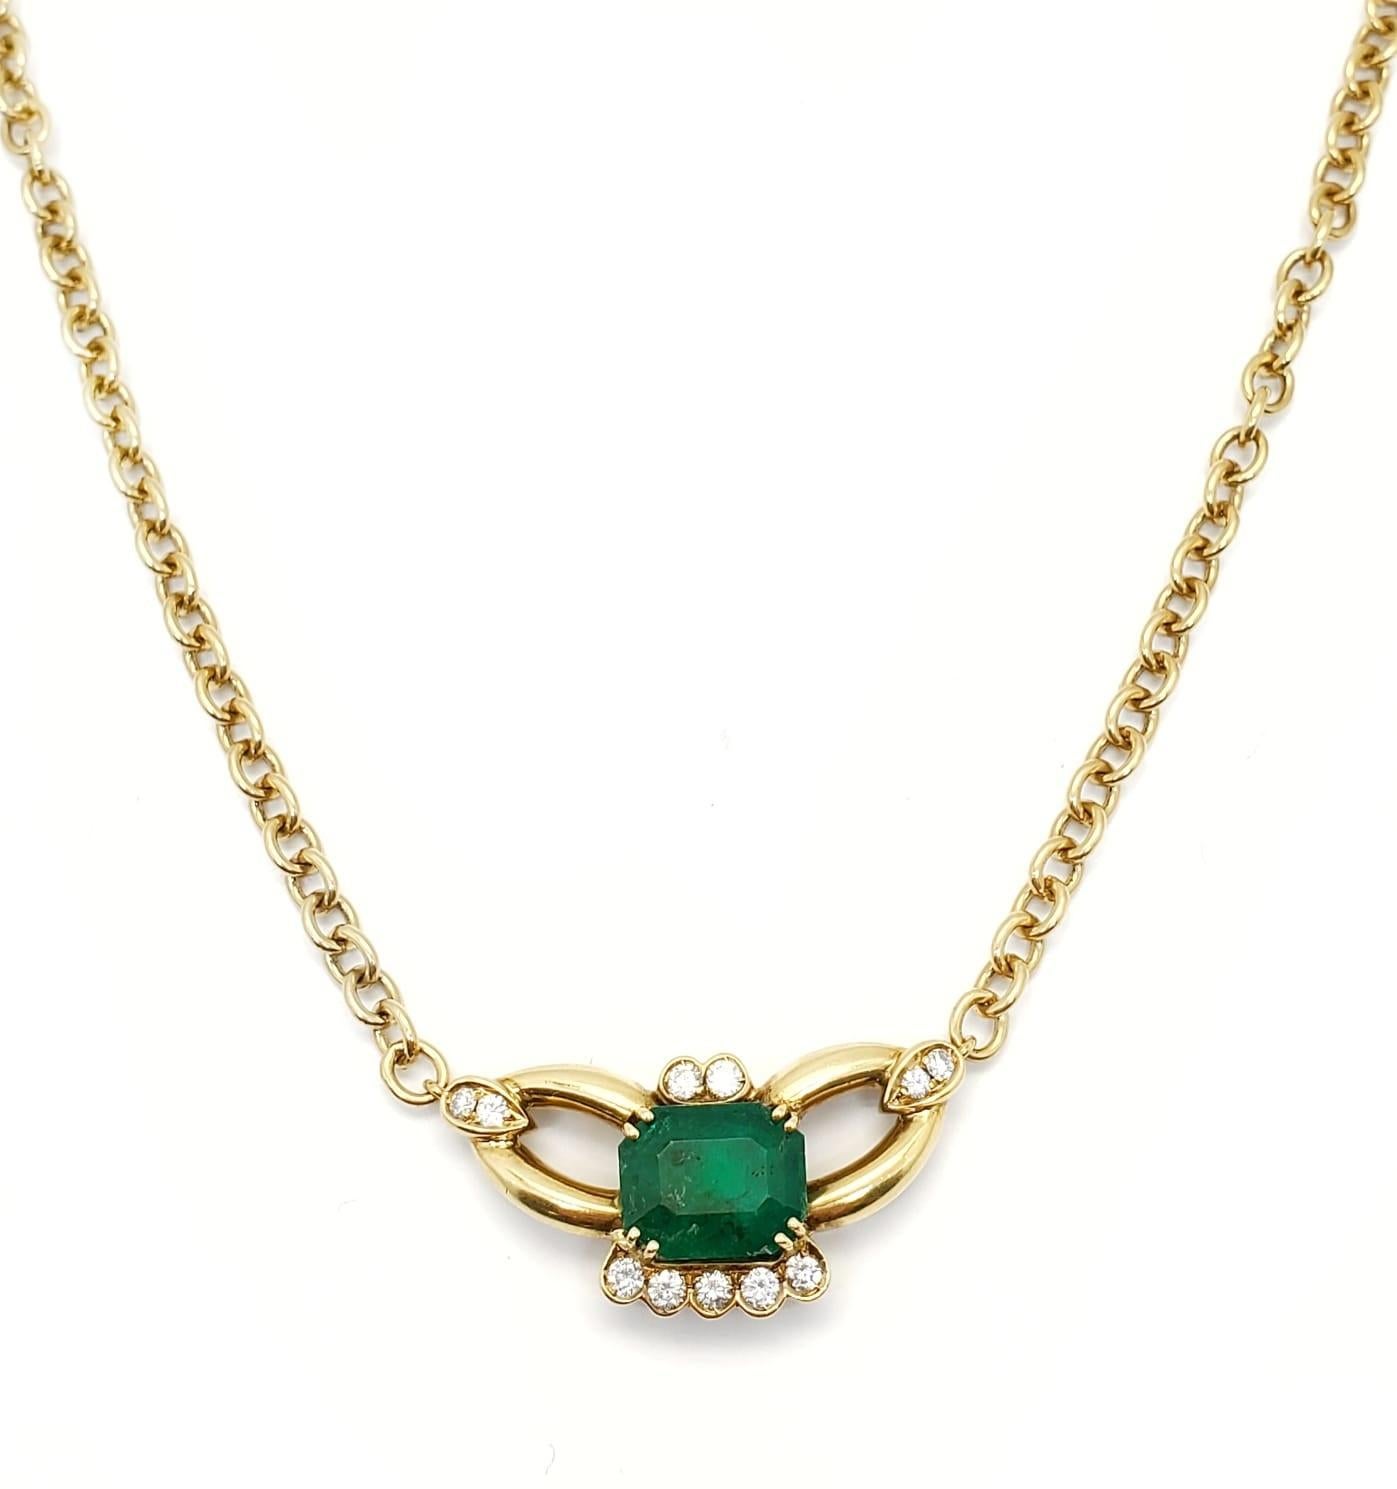 Andreoli 4.75 Carat Emerald Diamond 18 Karat Yellow Gold Pendant Necklace

This necklace features:
- 0.95 Carat Diamond
- 4.75 Carat Emerald
- 18K Yellow Gold
- Made In Italy